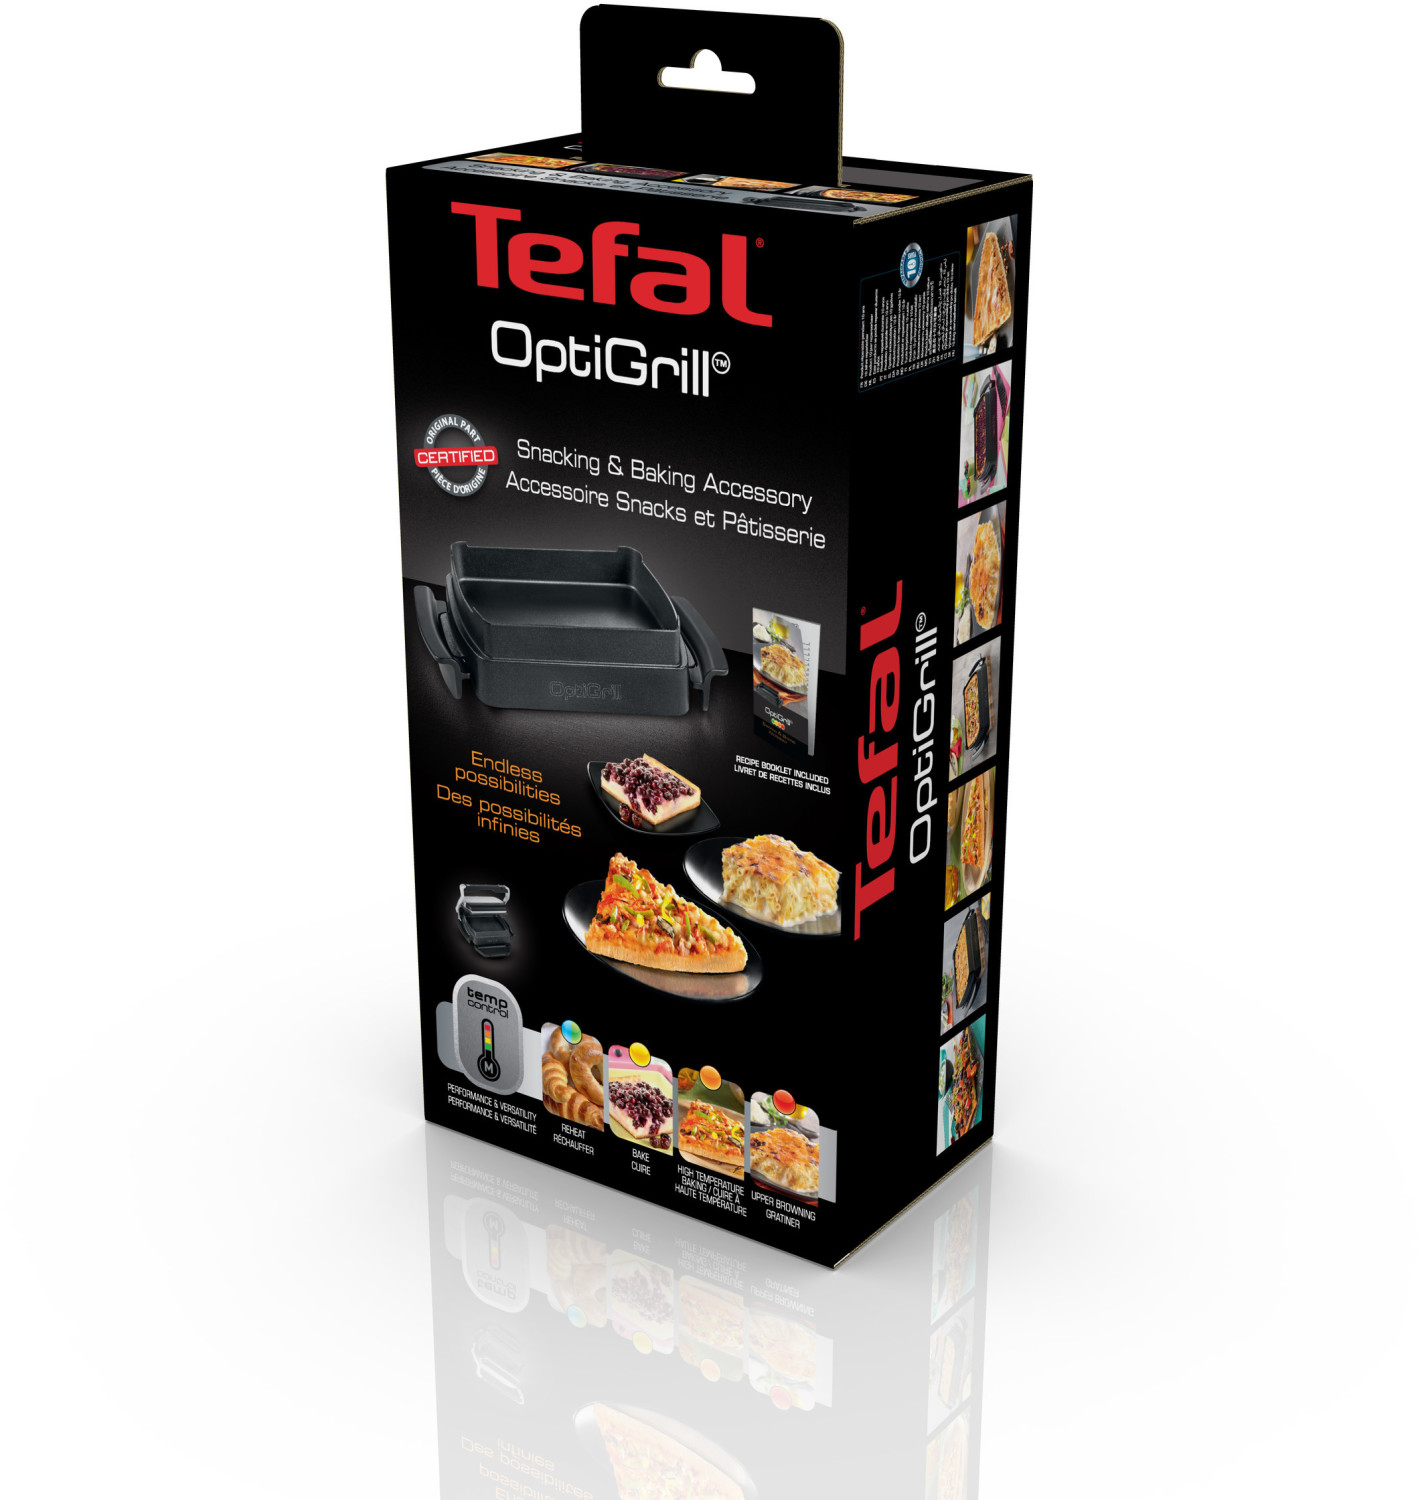 Tefal Backeinsatz XA7268 OptiGrill Snacking & Baking XL, Zubehör